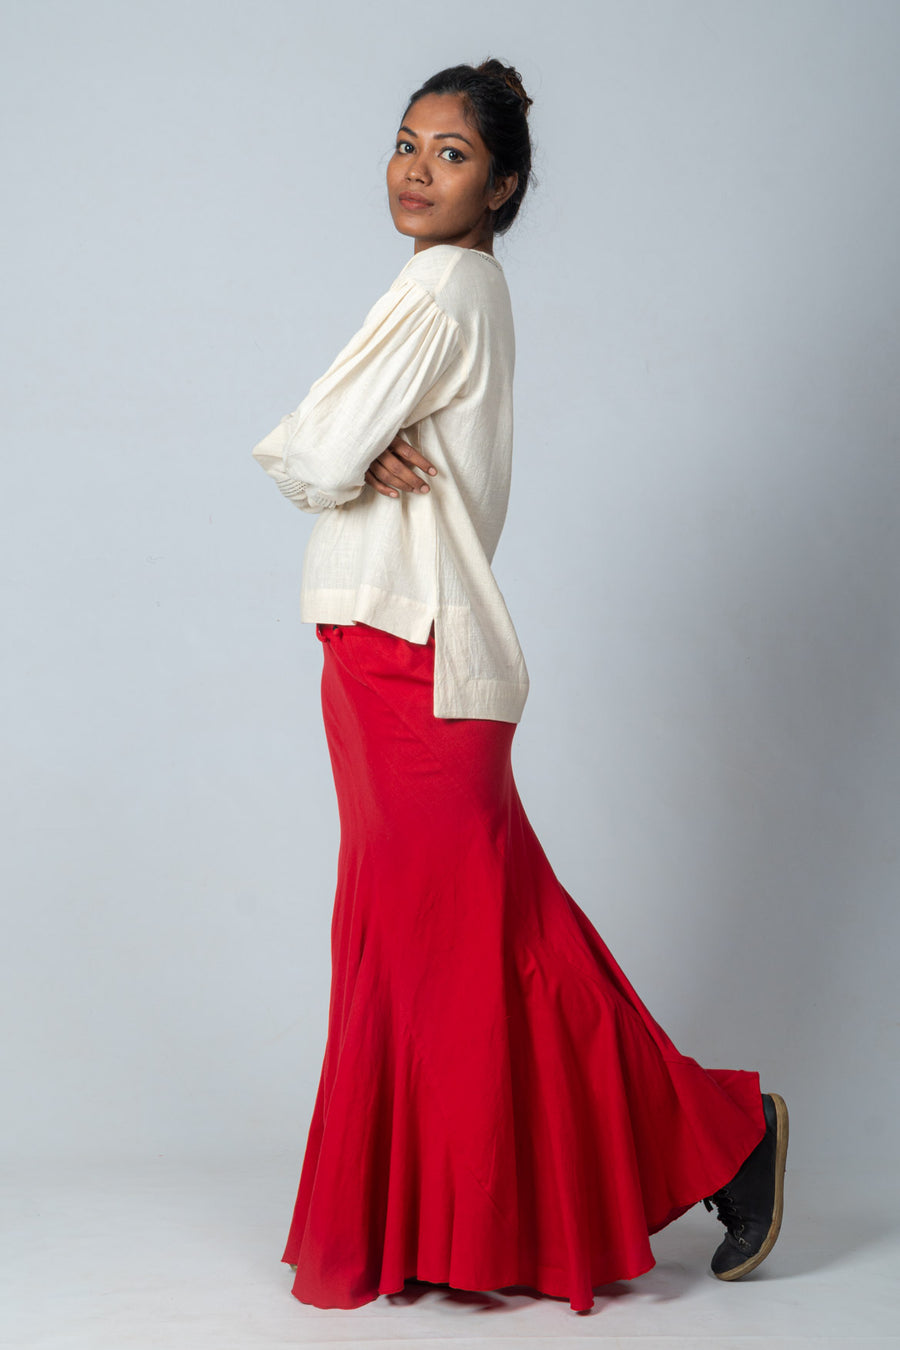 Off-White Organic Cotton Top with Red Kakoli Skirt- DHRUTI SET